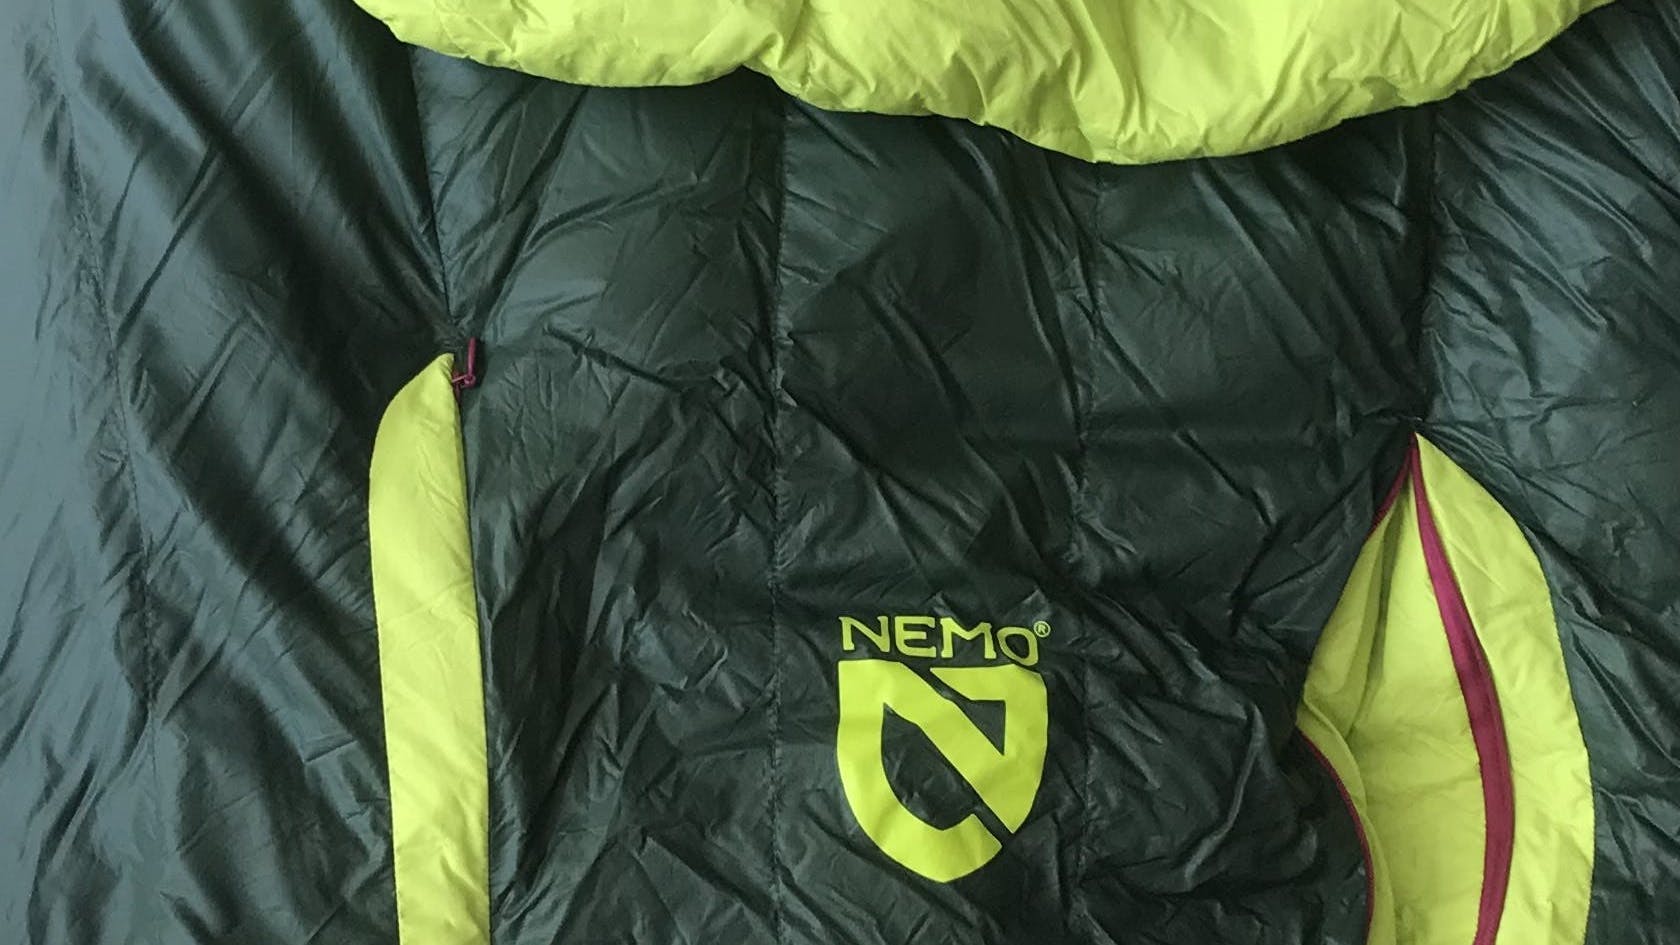 The Nemo Disco 15 degree sleeping bag.